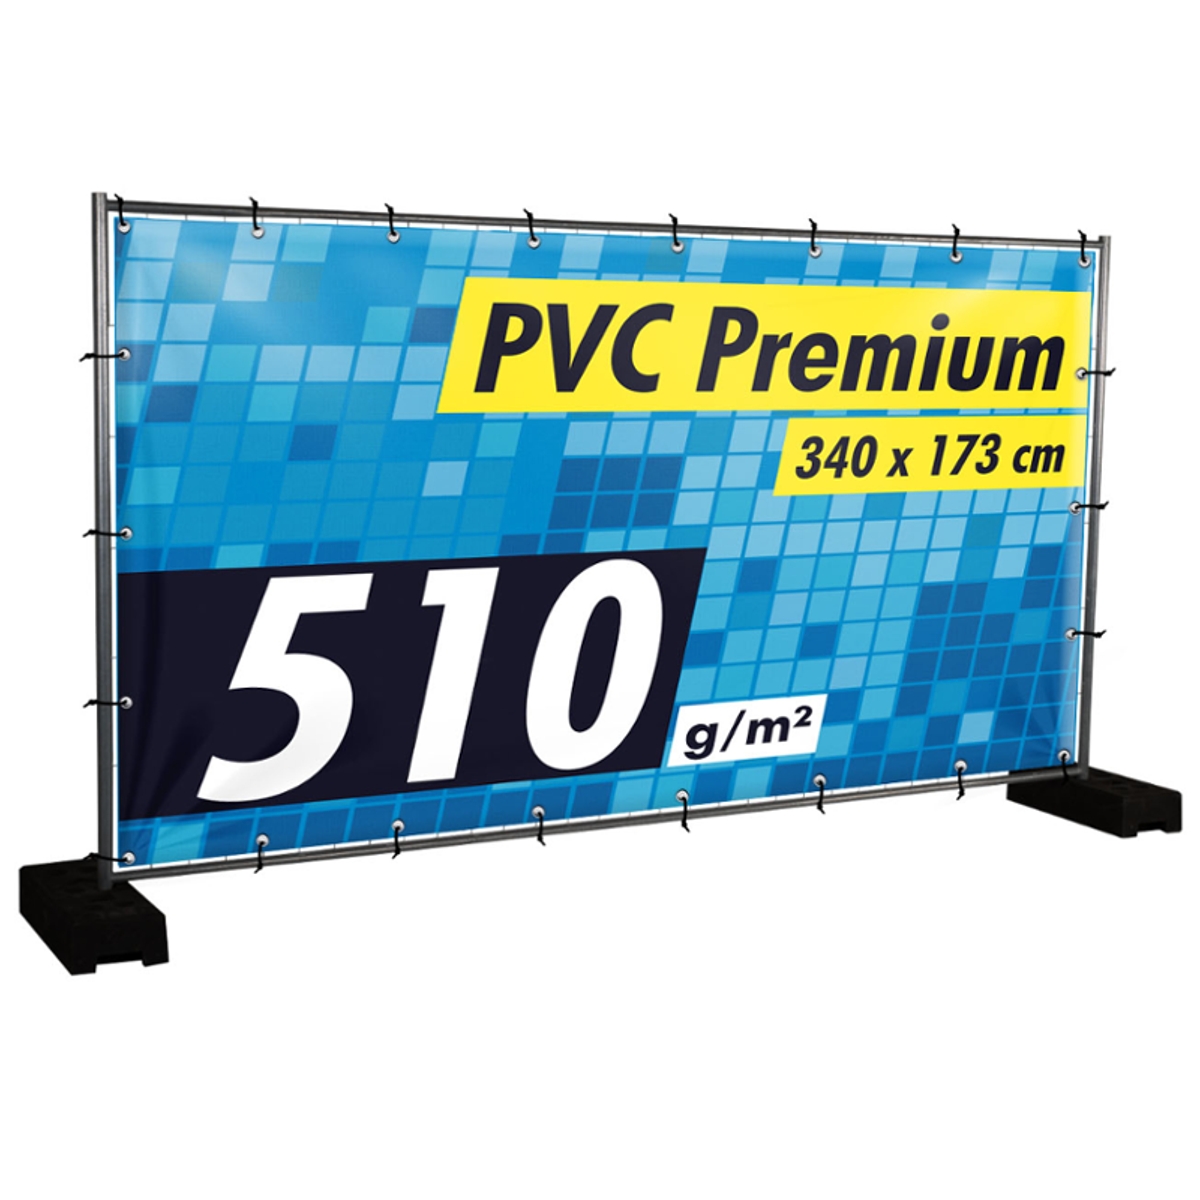 Bauzaunbanner gestalten, PVC Premium - 340 x 173 cm